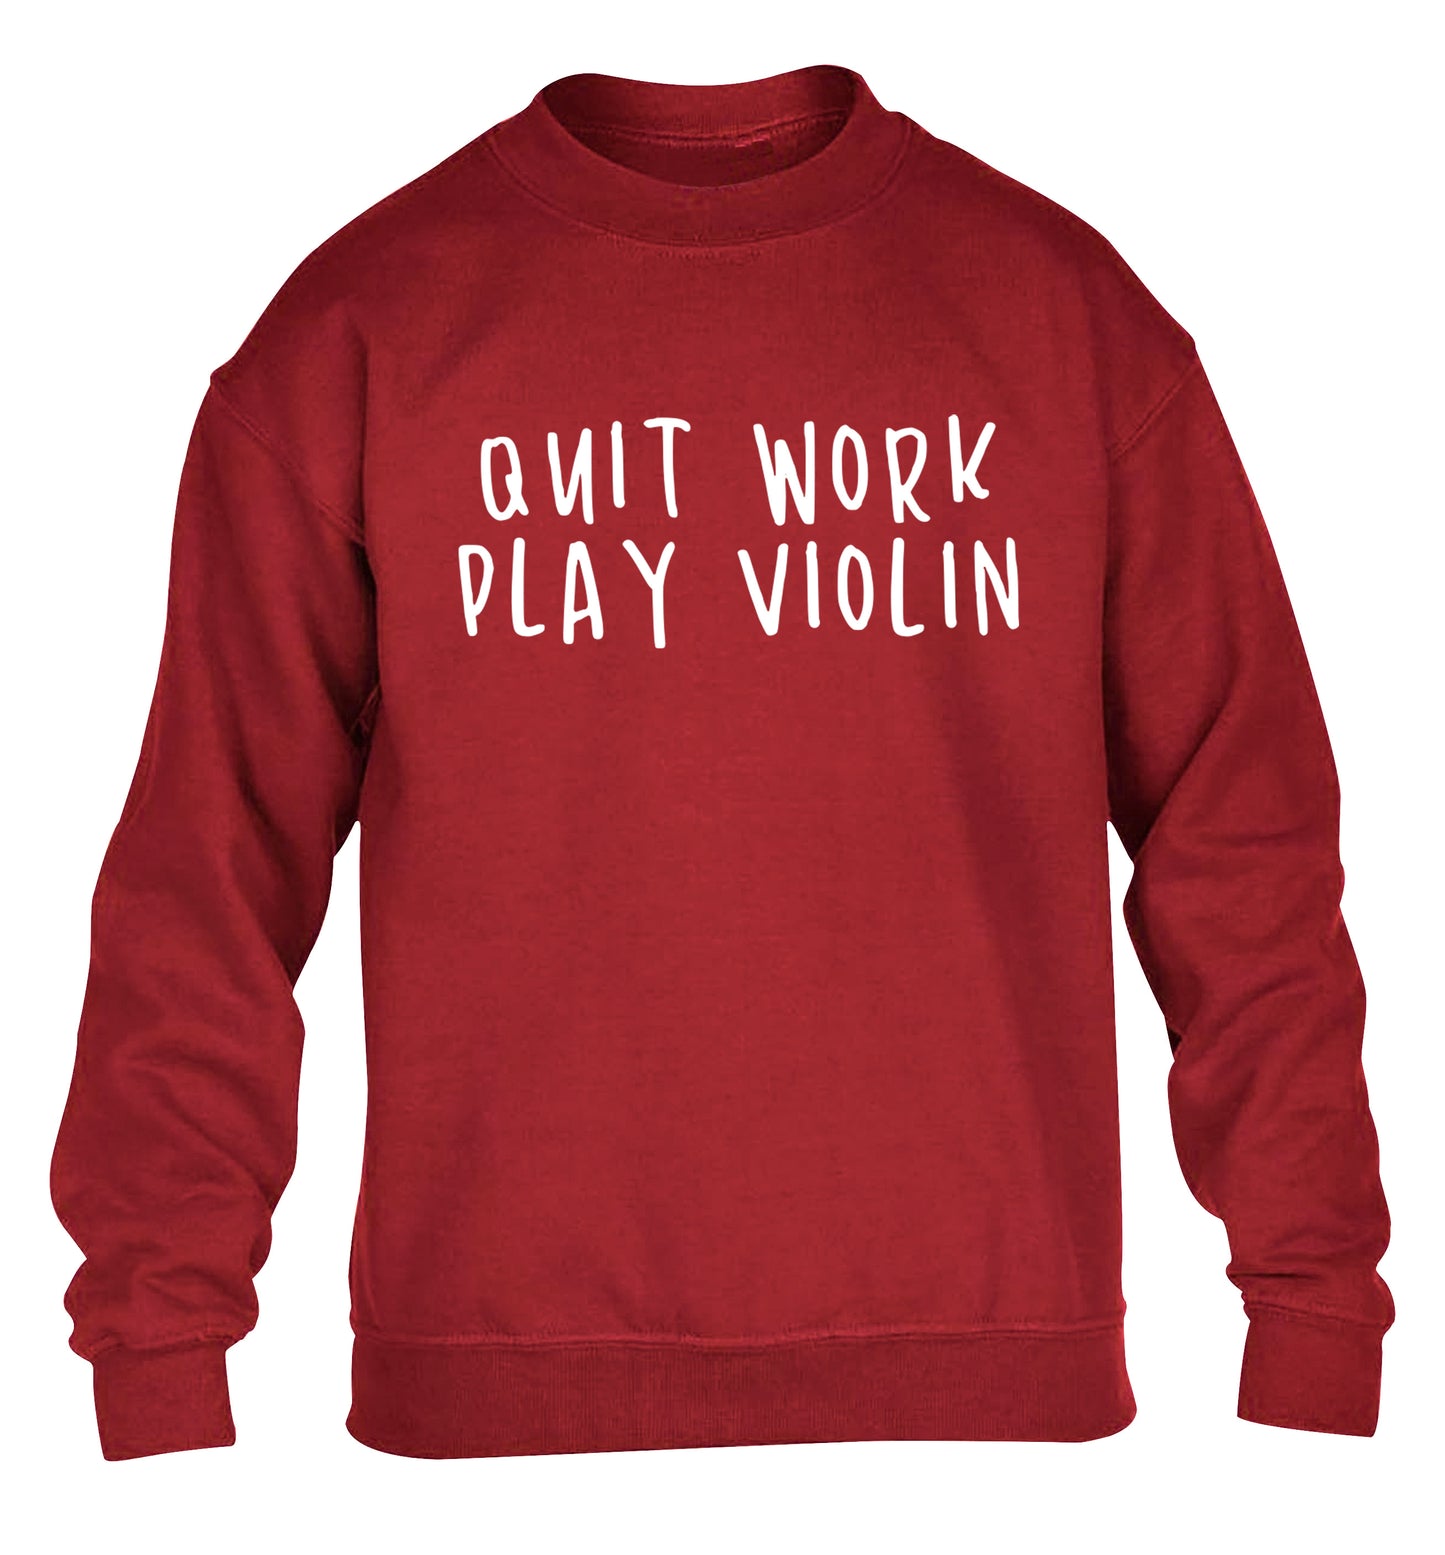 Quit work play violin children's grey sweater 12-13 Years